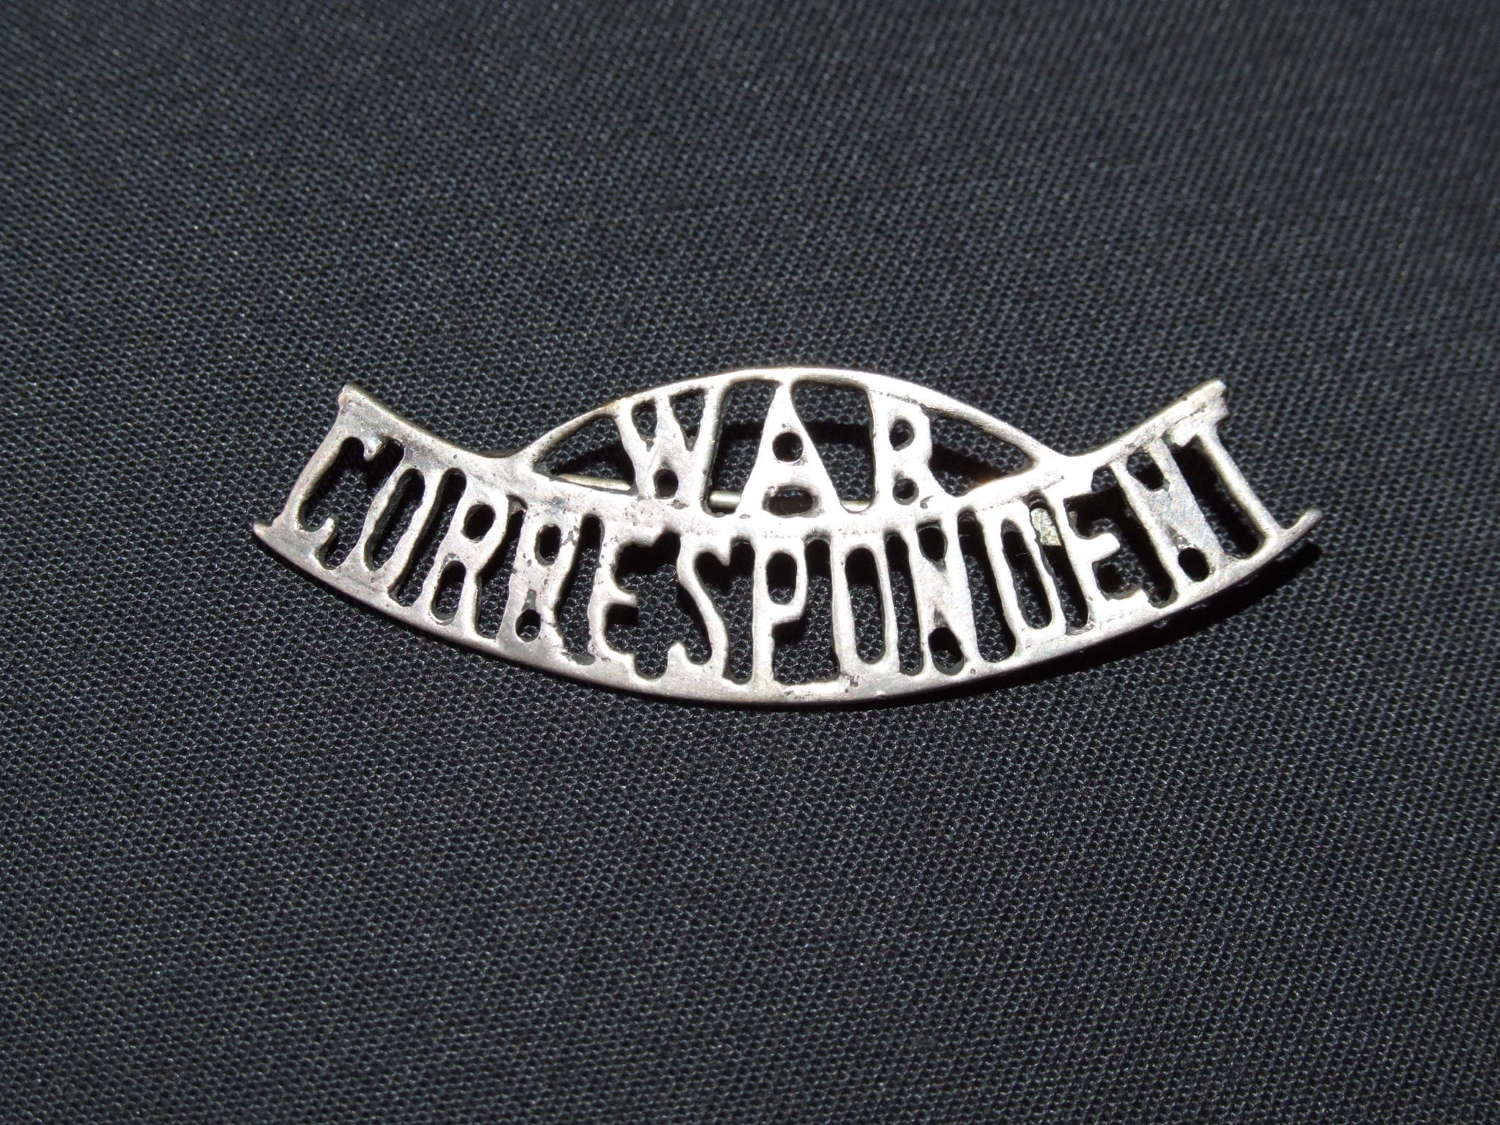 War Correspondent Badge in Sterling Silver